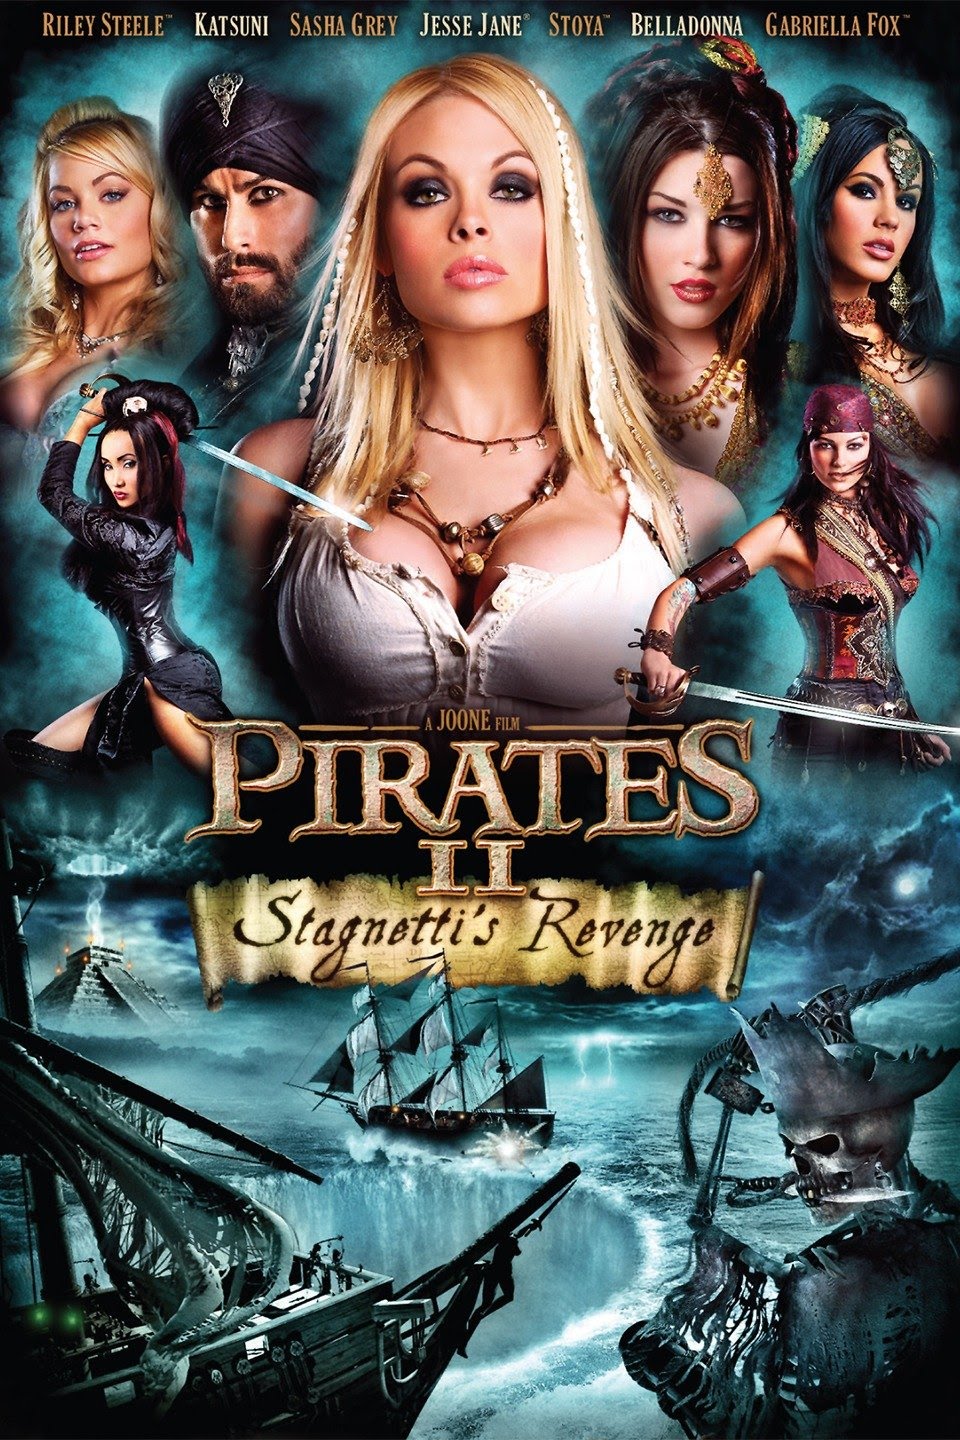 Pirates II: Stagnetti’s Revenge (2008) MP4 Movie (18+)